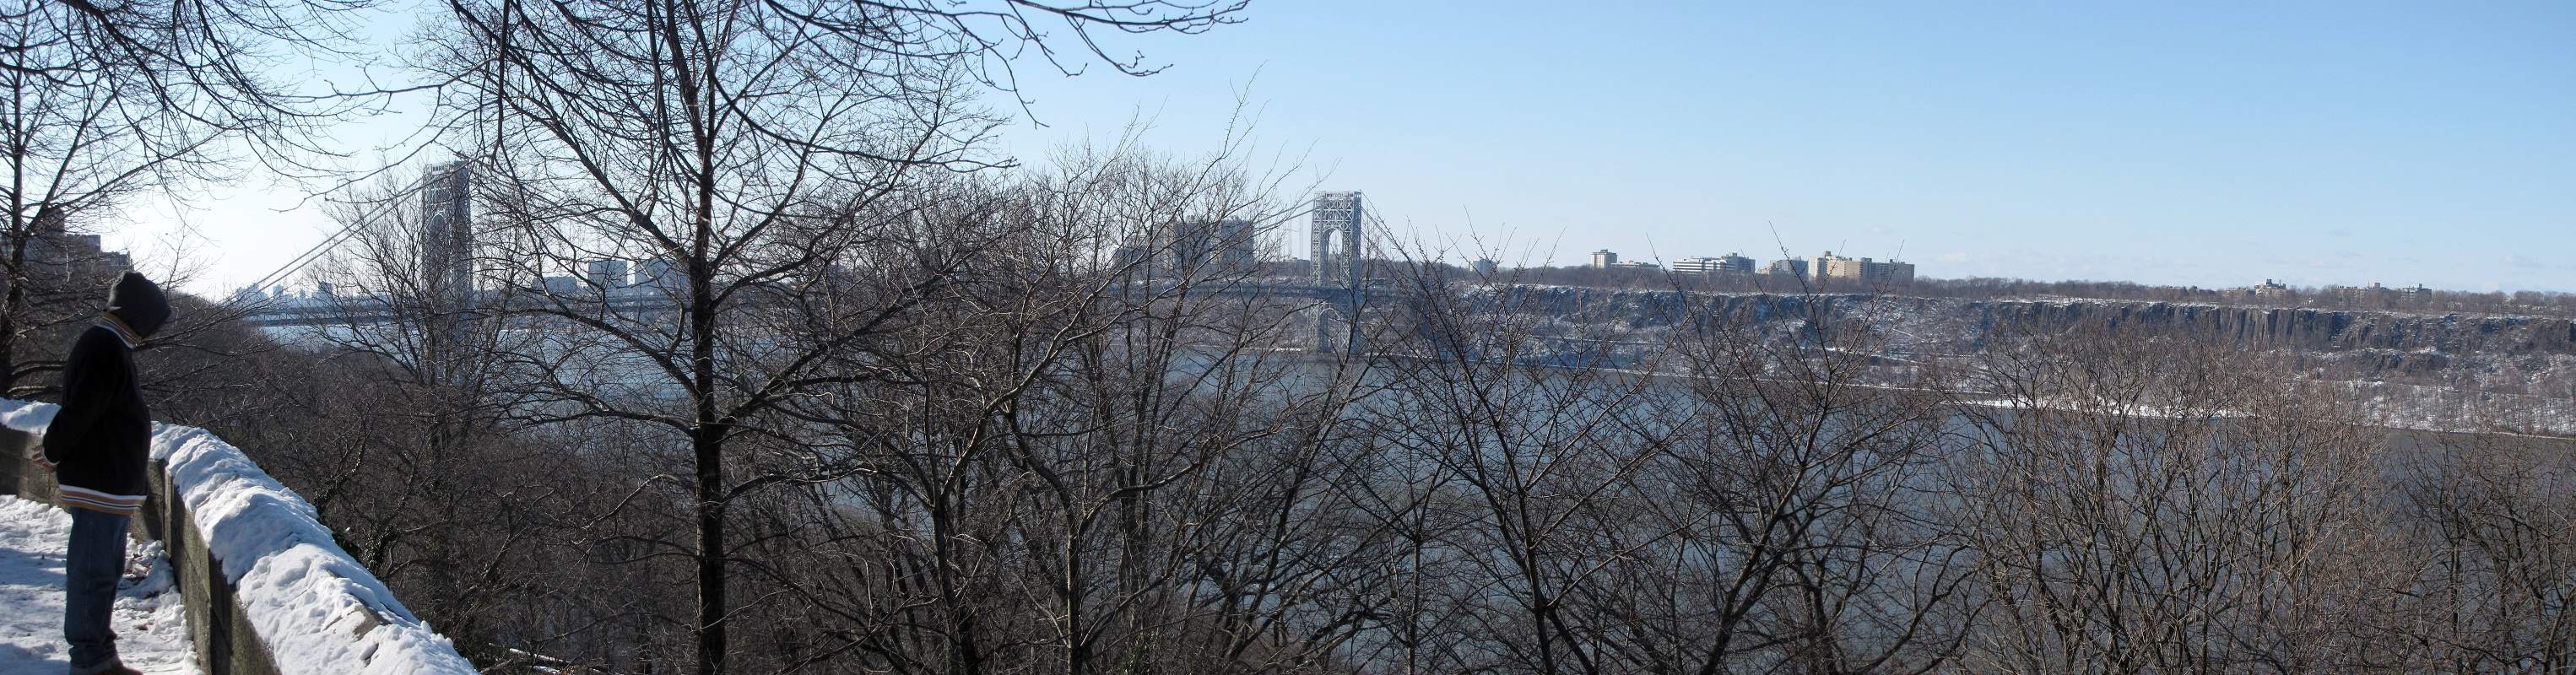 George Washington Bridge Panorama